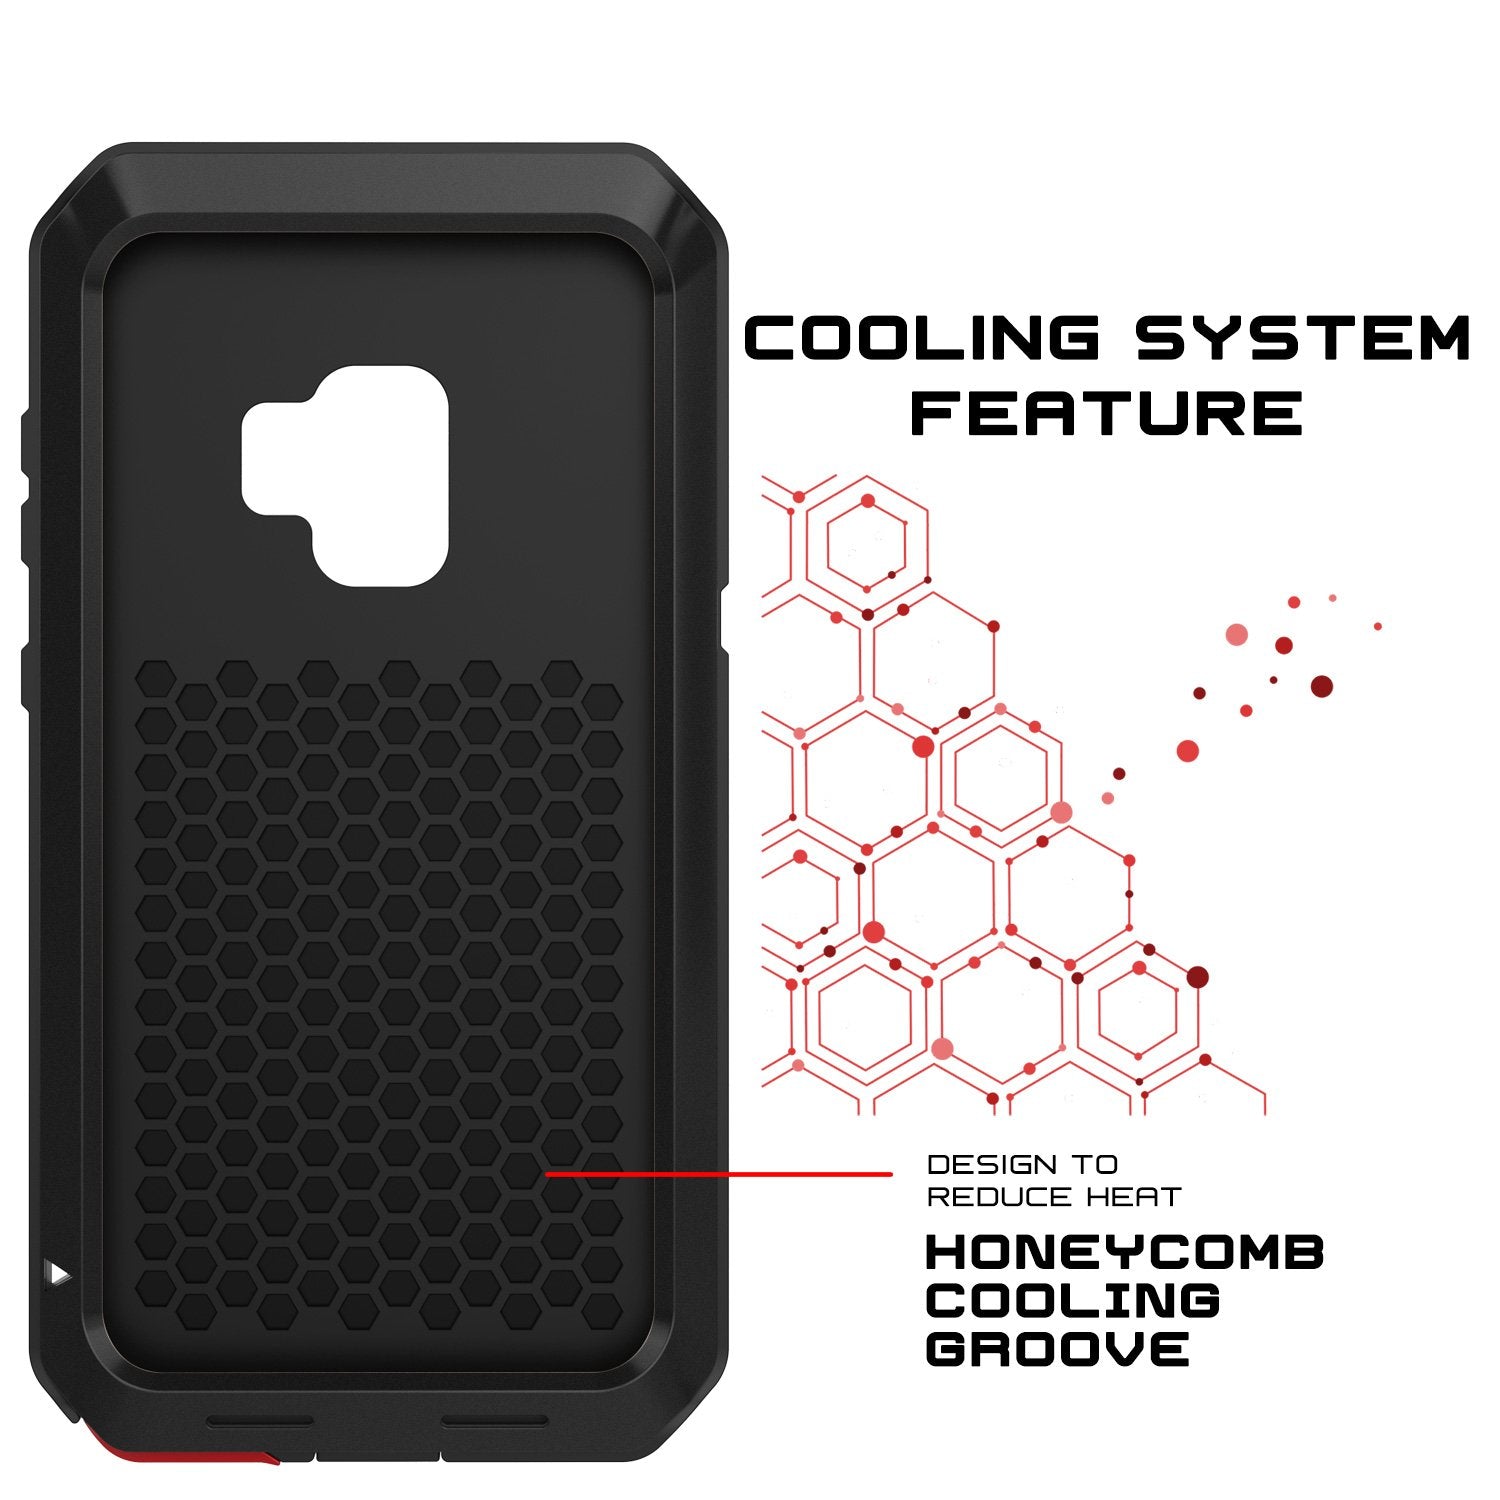 Galaxy S9 Hybrid Drop Proof TPU Design Metal Case [Black]